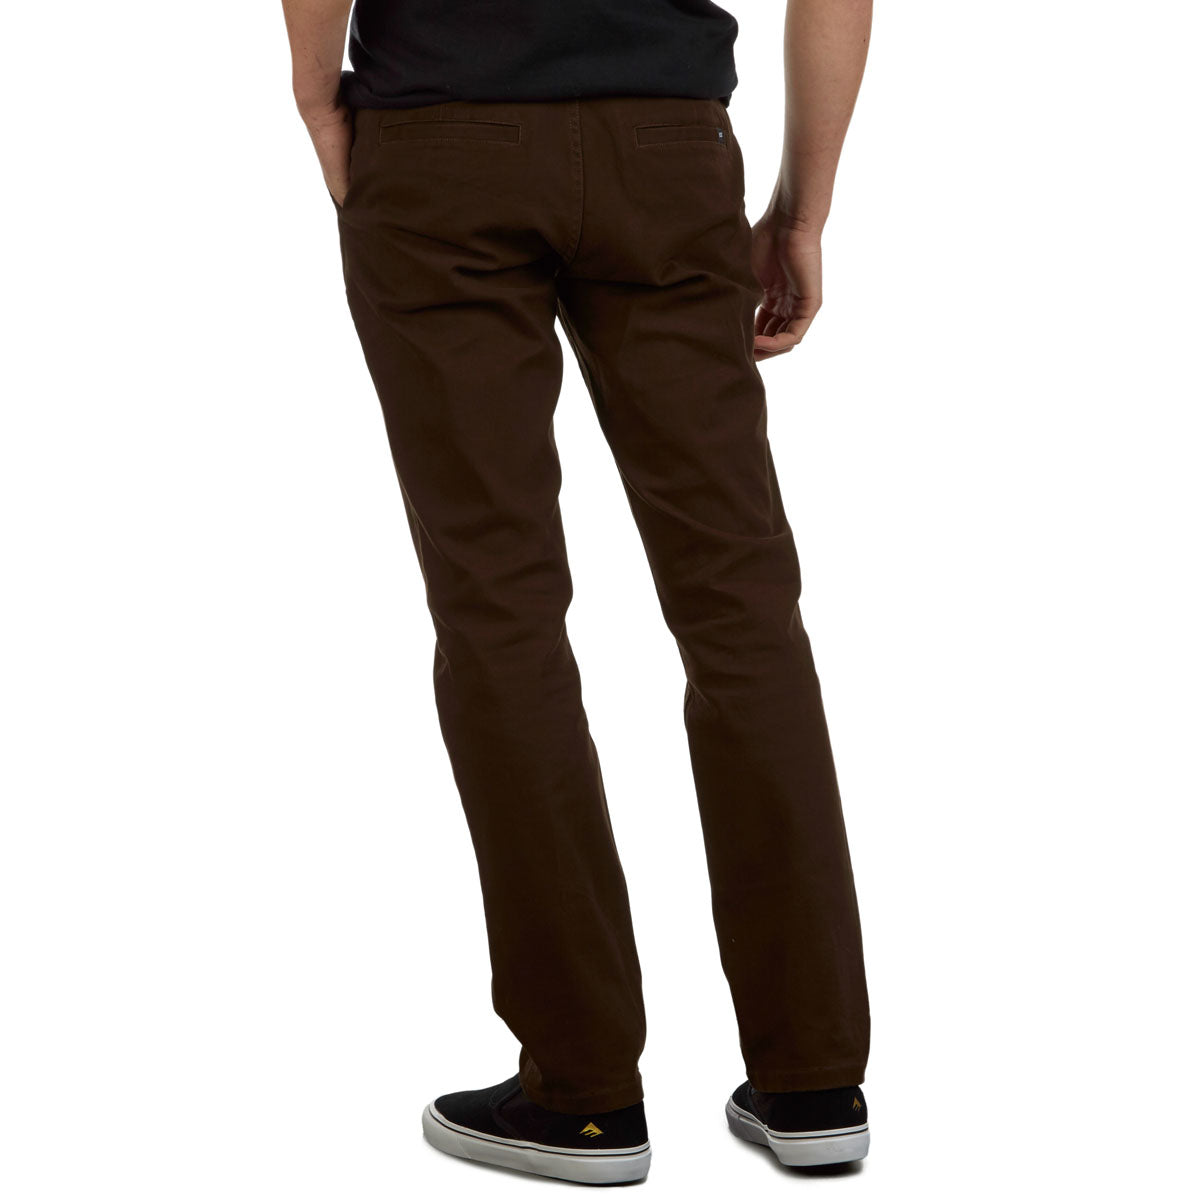 CCS Standard Plus Straight Chino Pants - Brown image 3